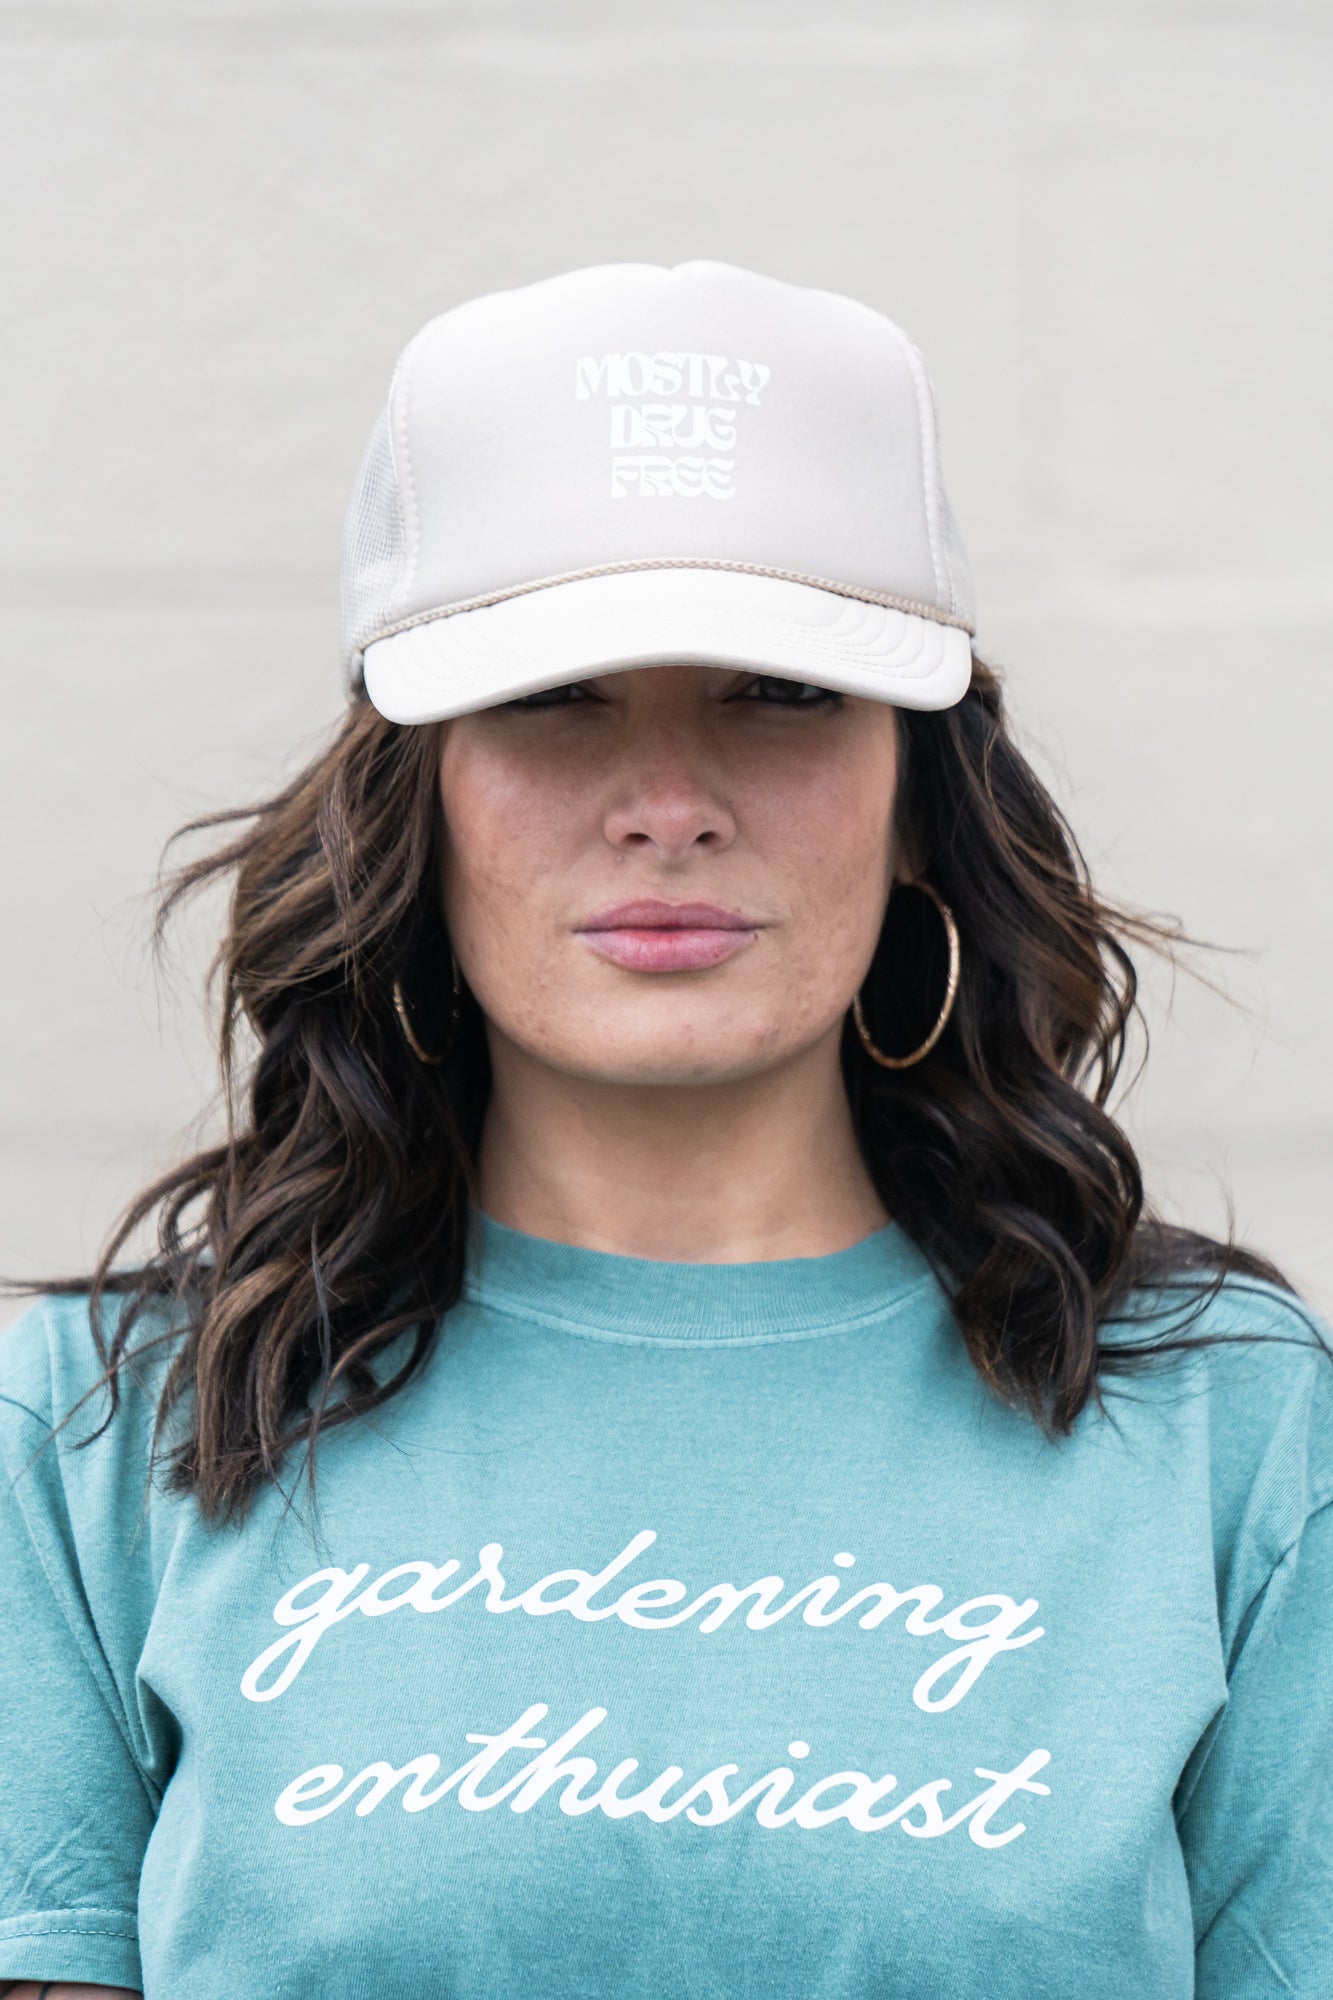 Gardening Enthusiast - Tee (Green)